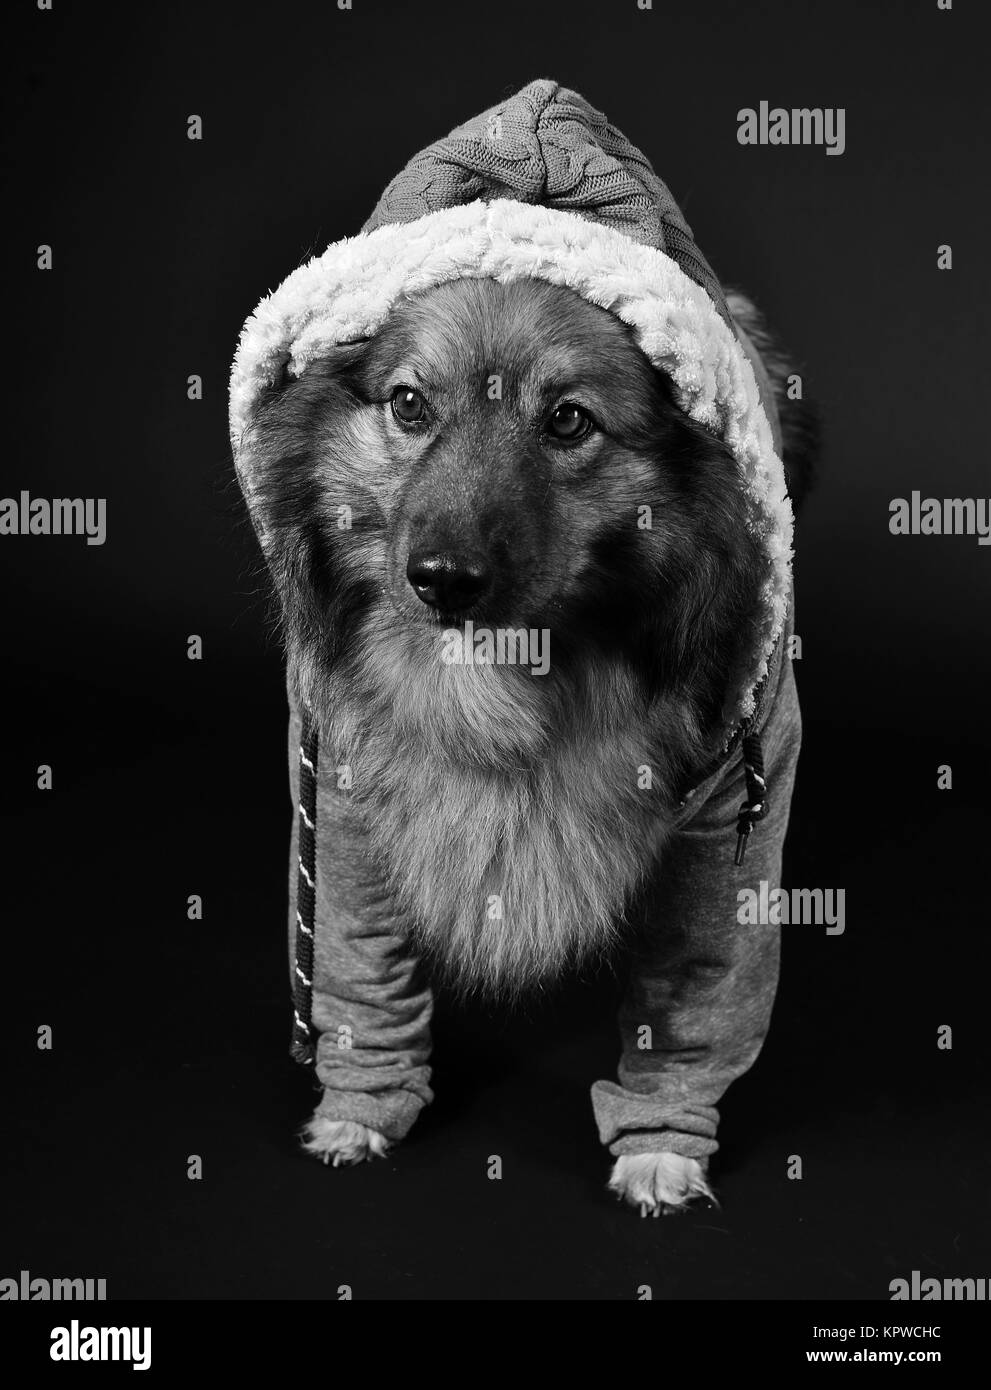 cool dog hooded hoodie keeshond Stock Photo